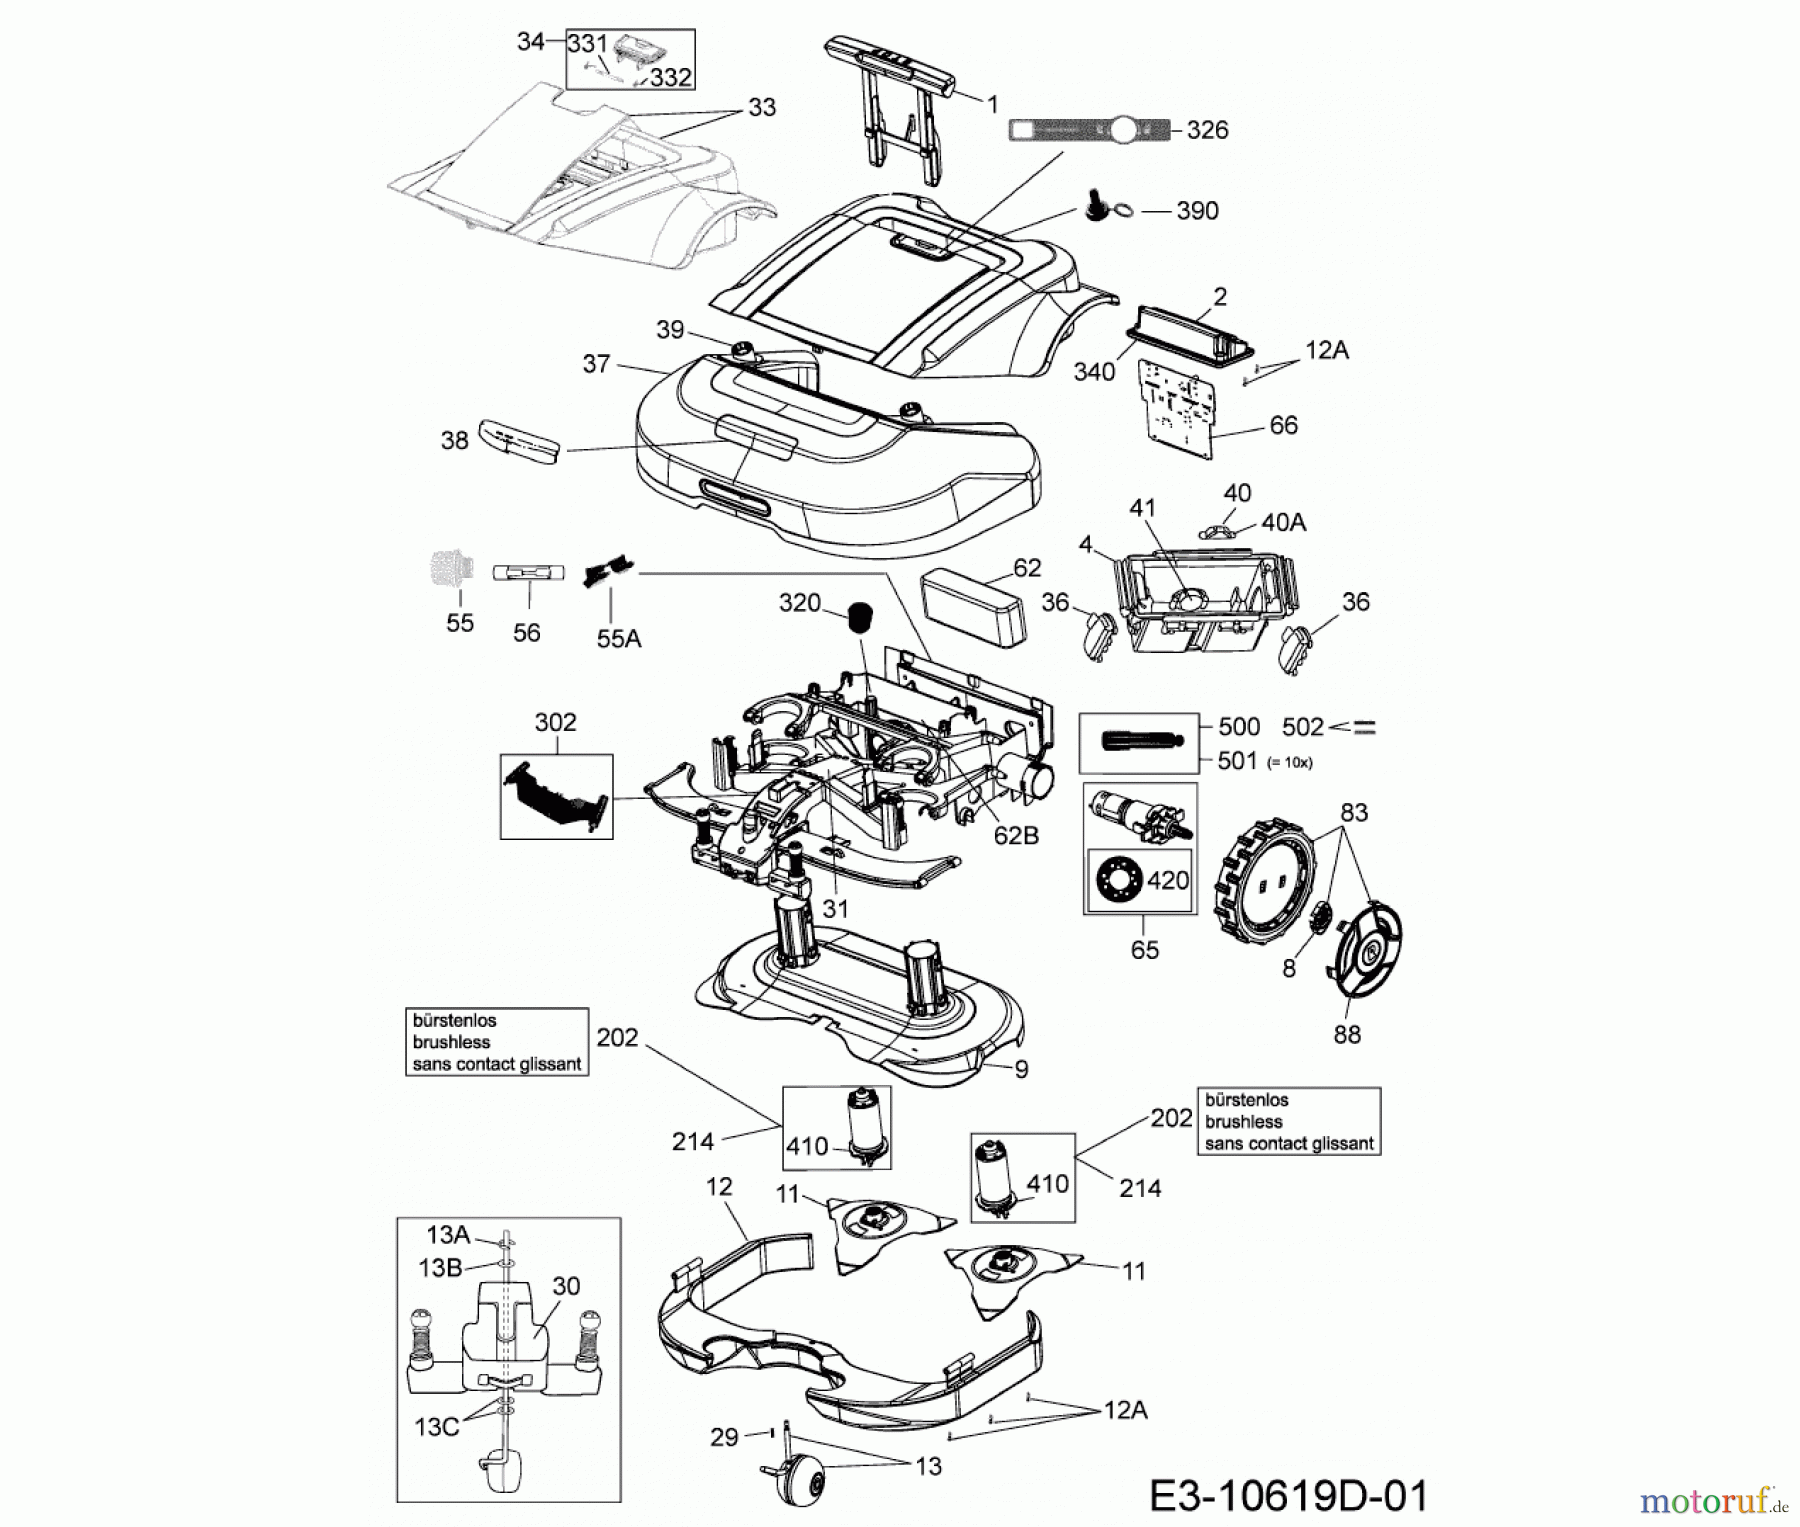  Robomow Robotic lawn mower RS615U 22BSBA-A619 (2020) Basic machine